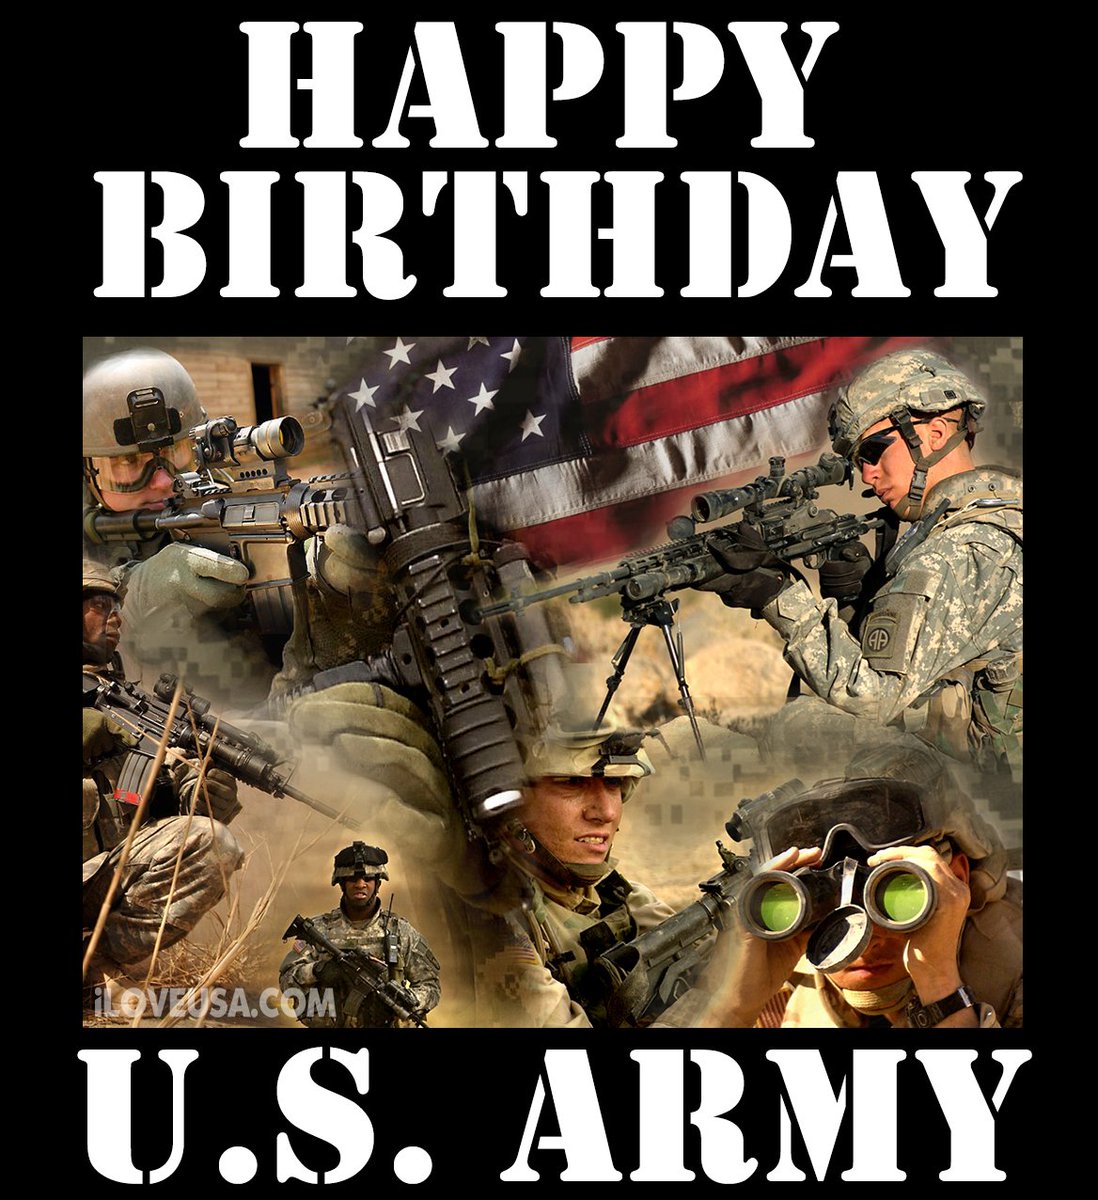 🇺🇸Veterans from all branches wish a very Happy Birthday to the US Army!🇺🇸 @CoVet_81 @Ilegvm @mil_vet17 @USAVet_5 @USAFirstPatriot @Scobra642 @Vet4DJT @_djtII @thandar324 @JohnTCross2 @Kvmidd1 @JohnMStubbins @Ranger88 @787RLTW @tomlin_francis @ssgtbarbarausaf @LeeGimenez #USArmy